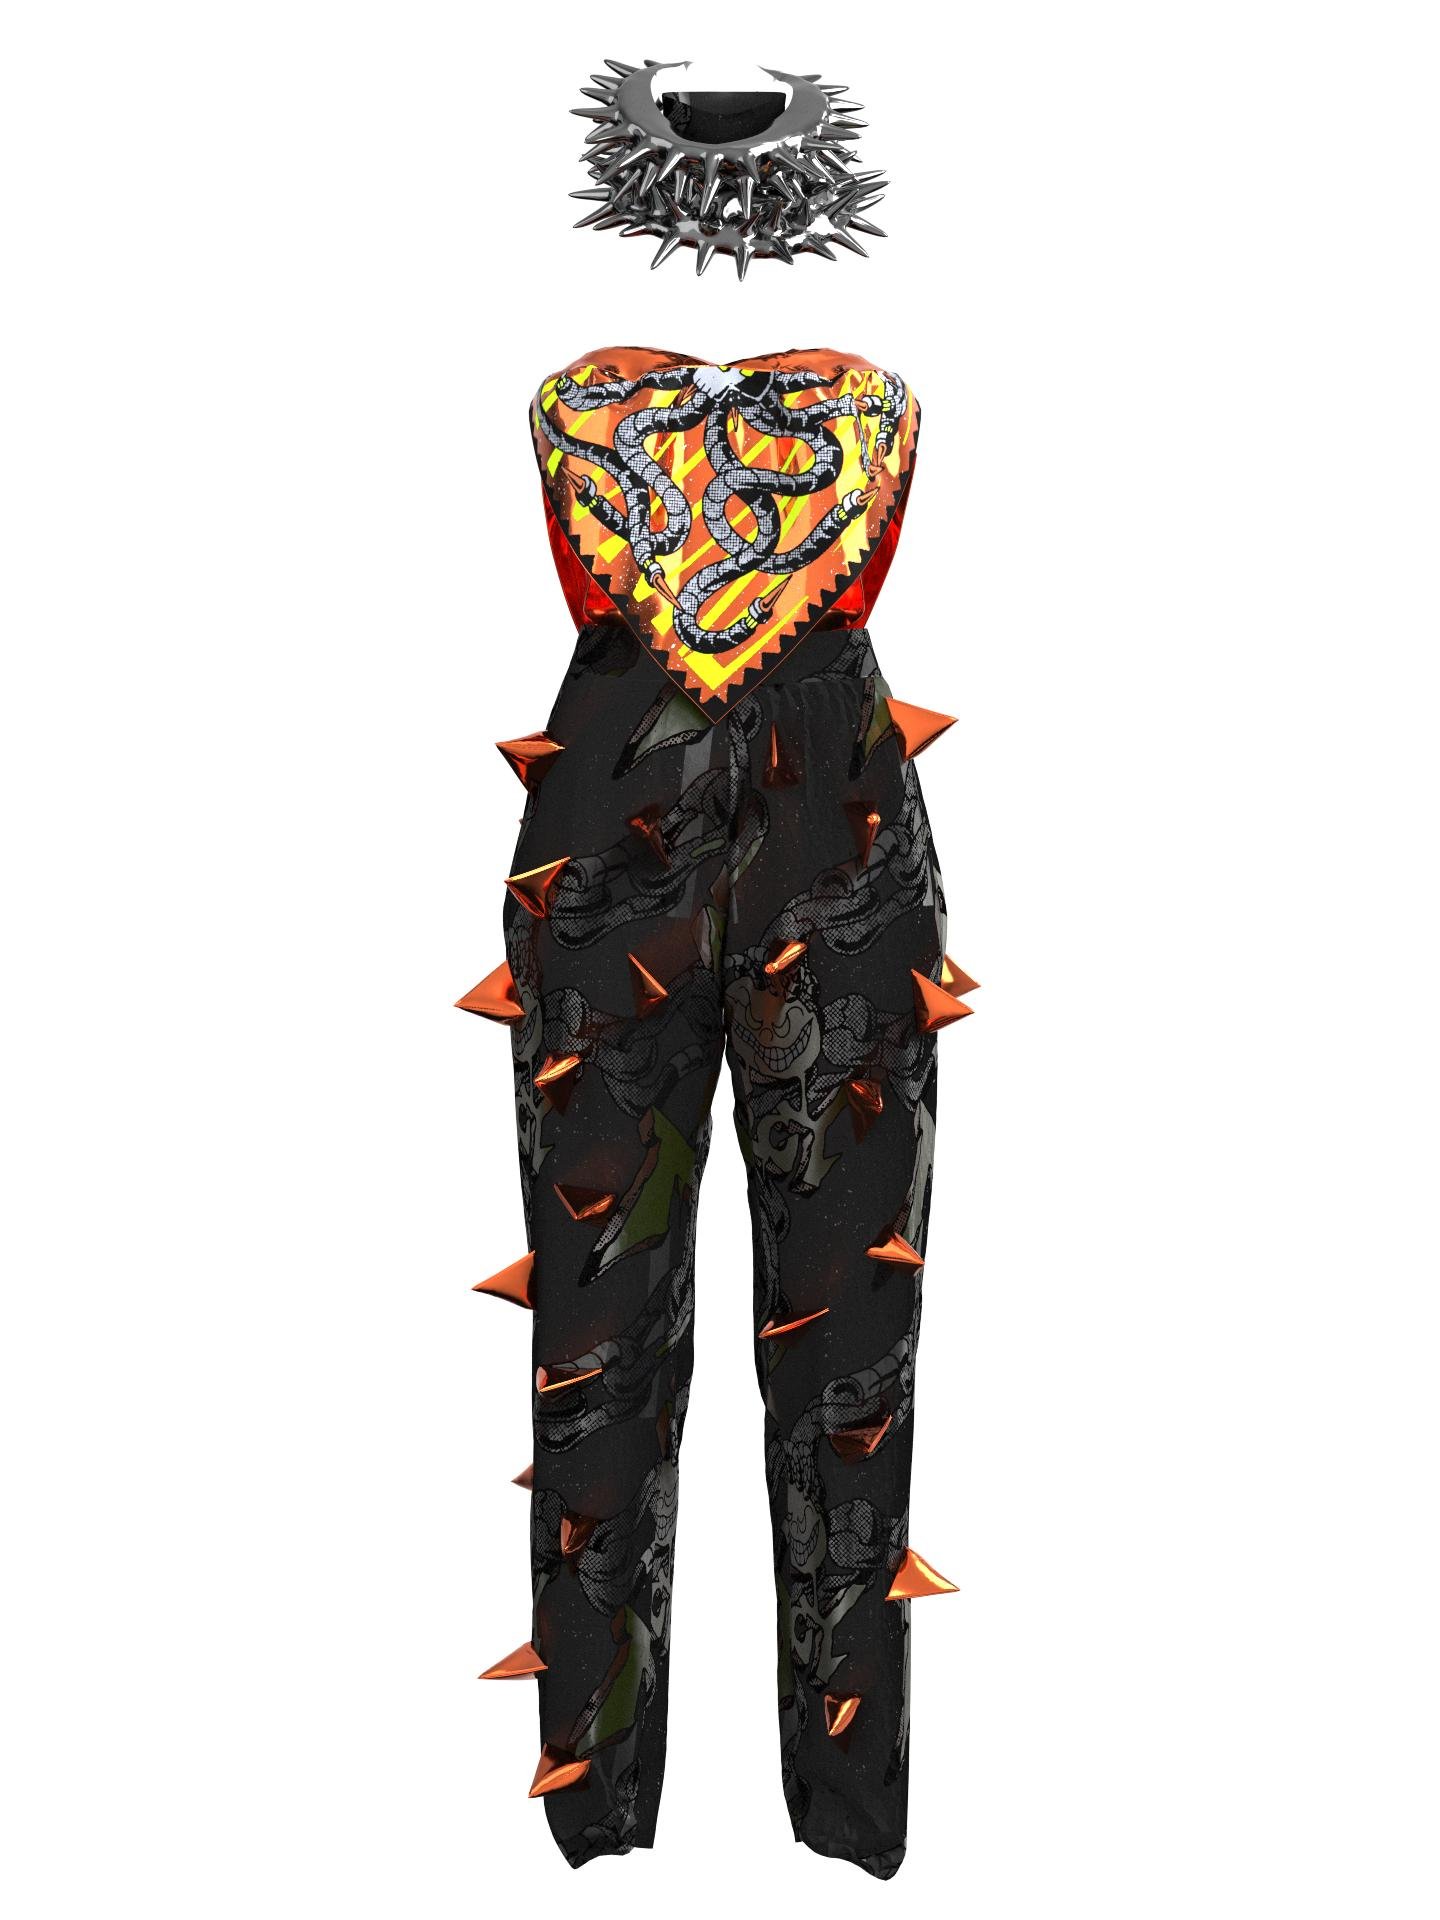 Spiked Bio-meta Suit by BUYO STUDIO BY SOFIA CUCCHI